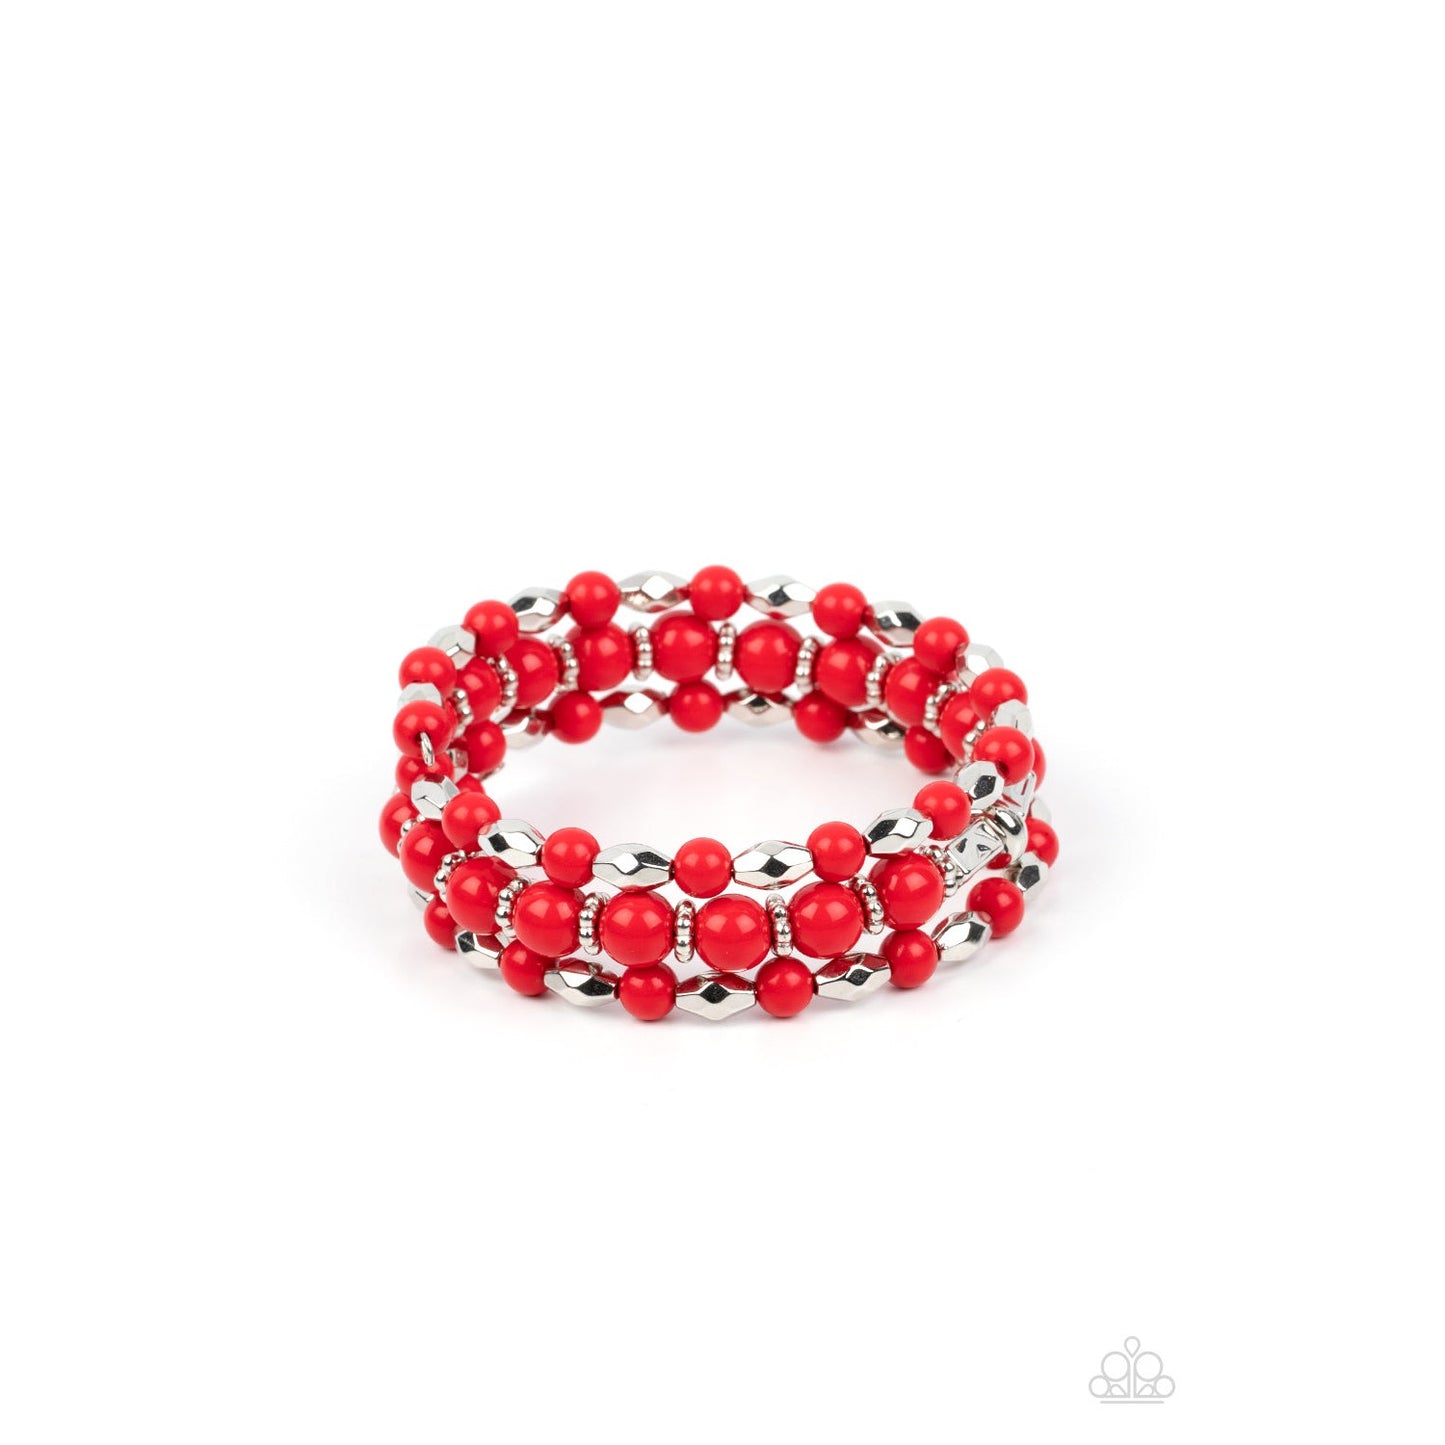 Colorfully Coiled - Red Coil Bracelet - Bling by Danielle Baker